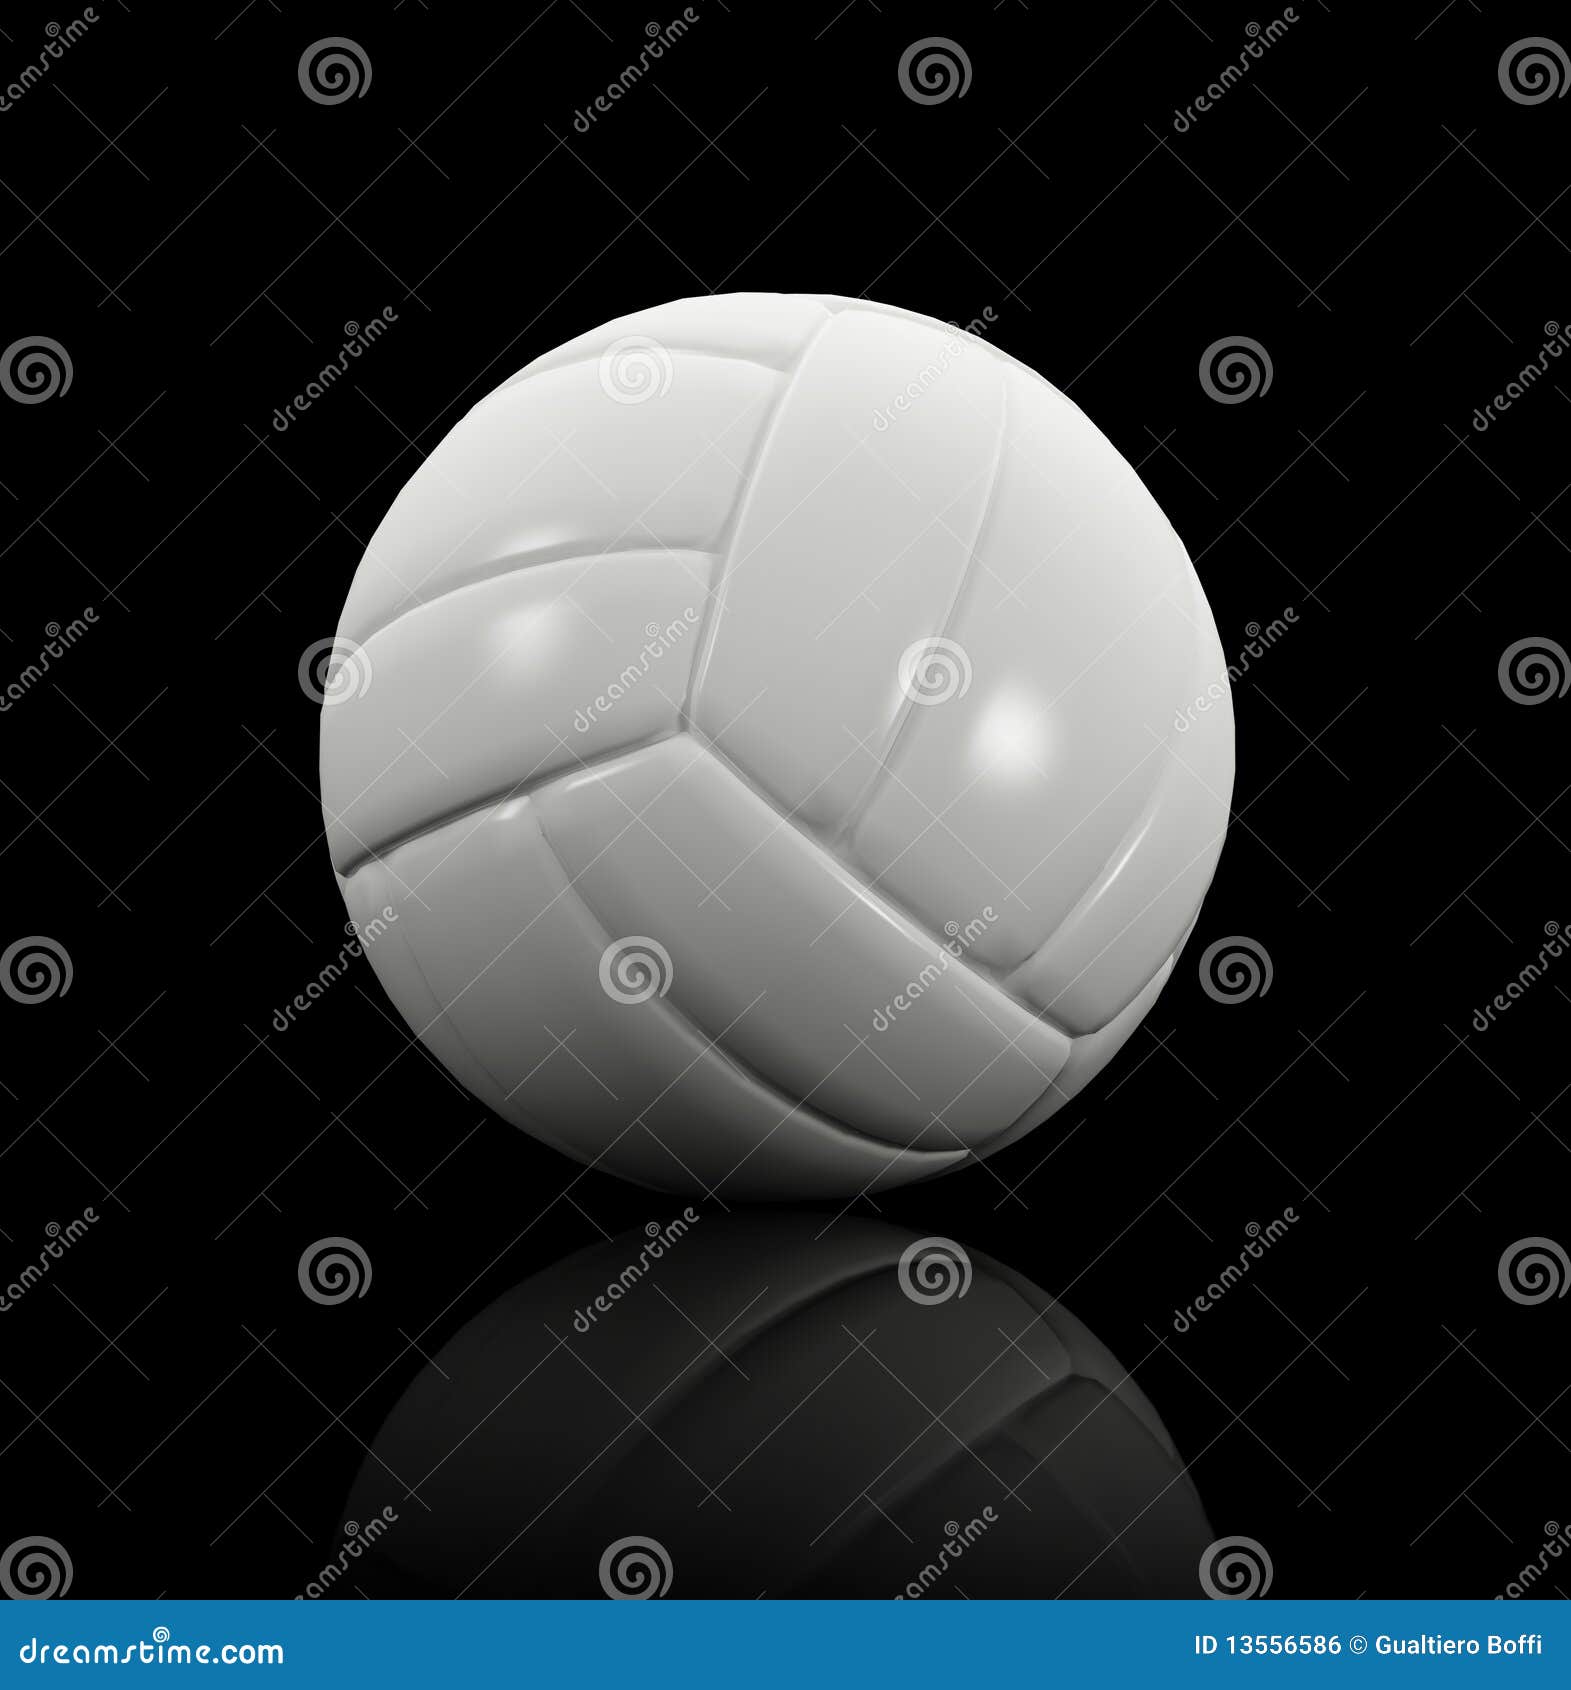 Volley ball on black stock illustration. Illustration of equipment ...